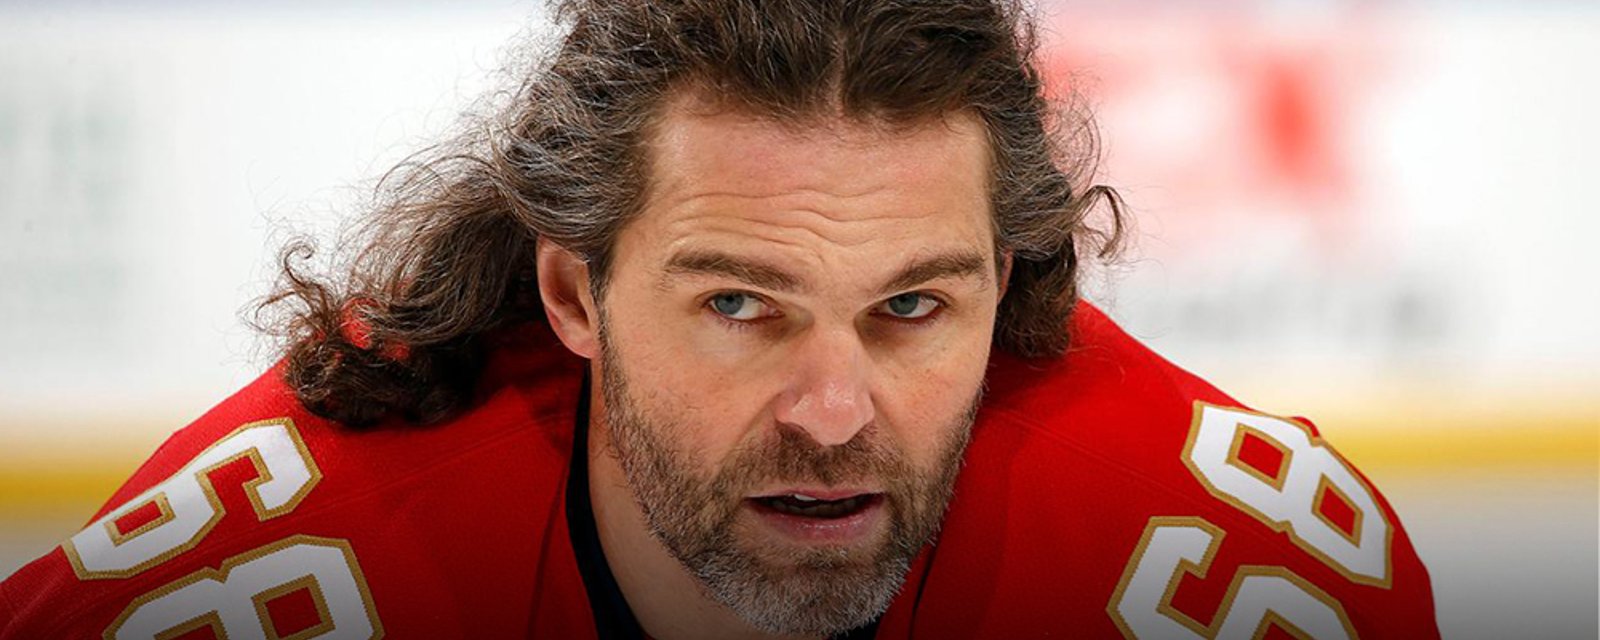 Breaking: Jagr still out, Flames coach makes disturbing statement 